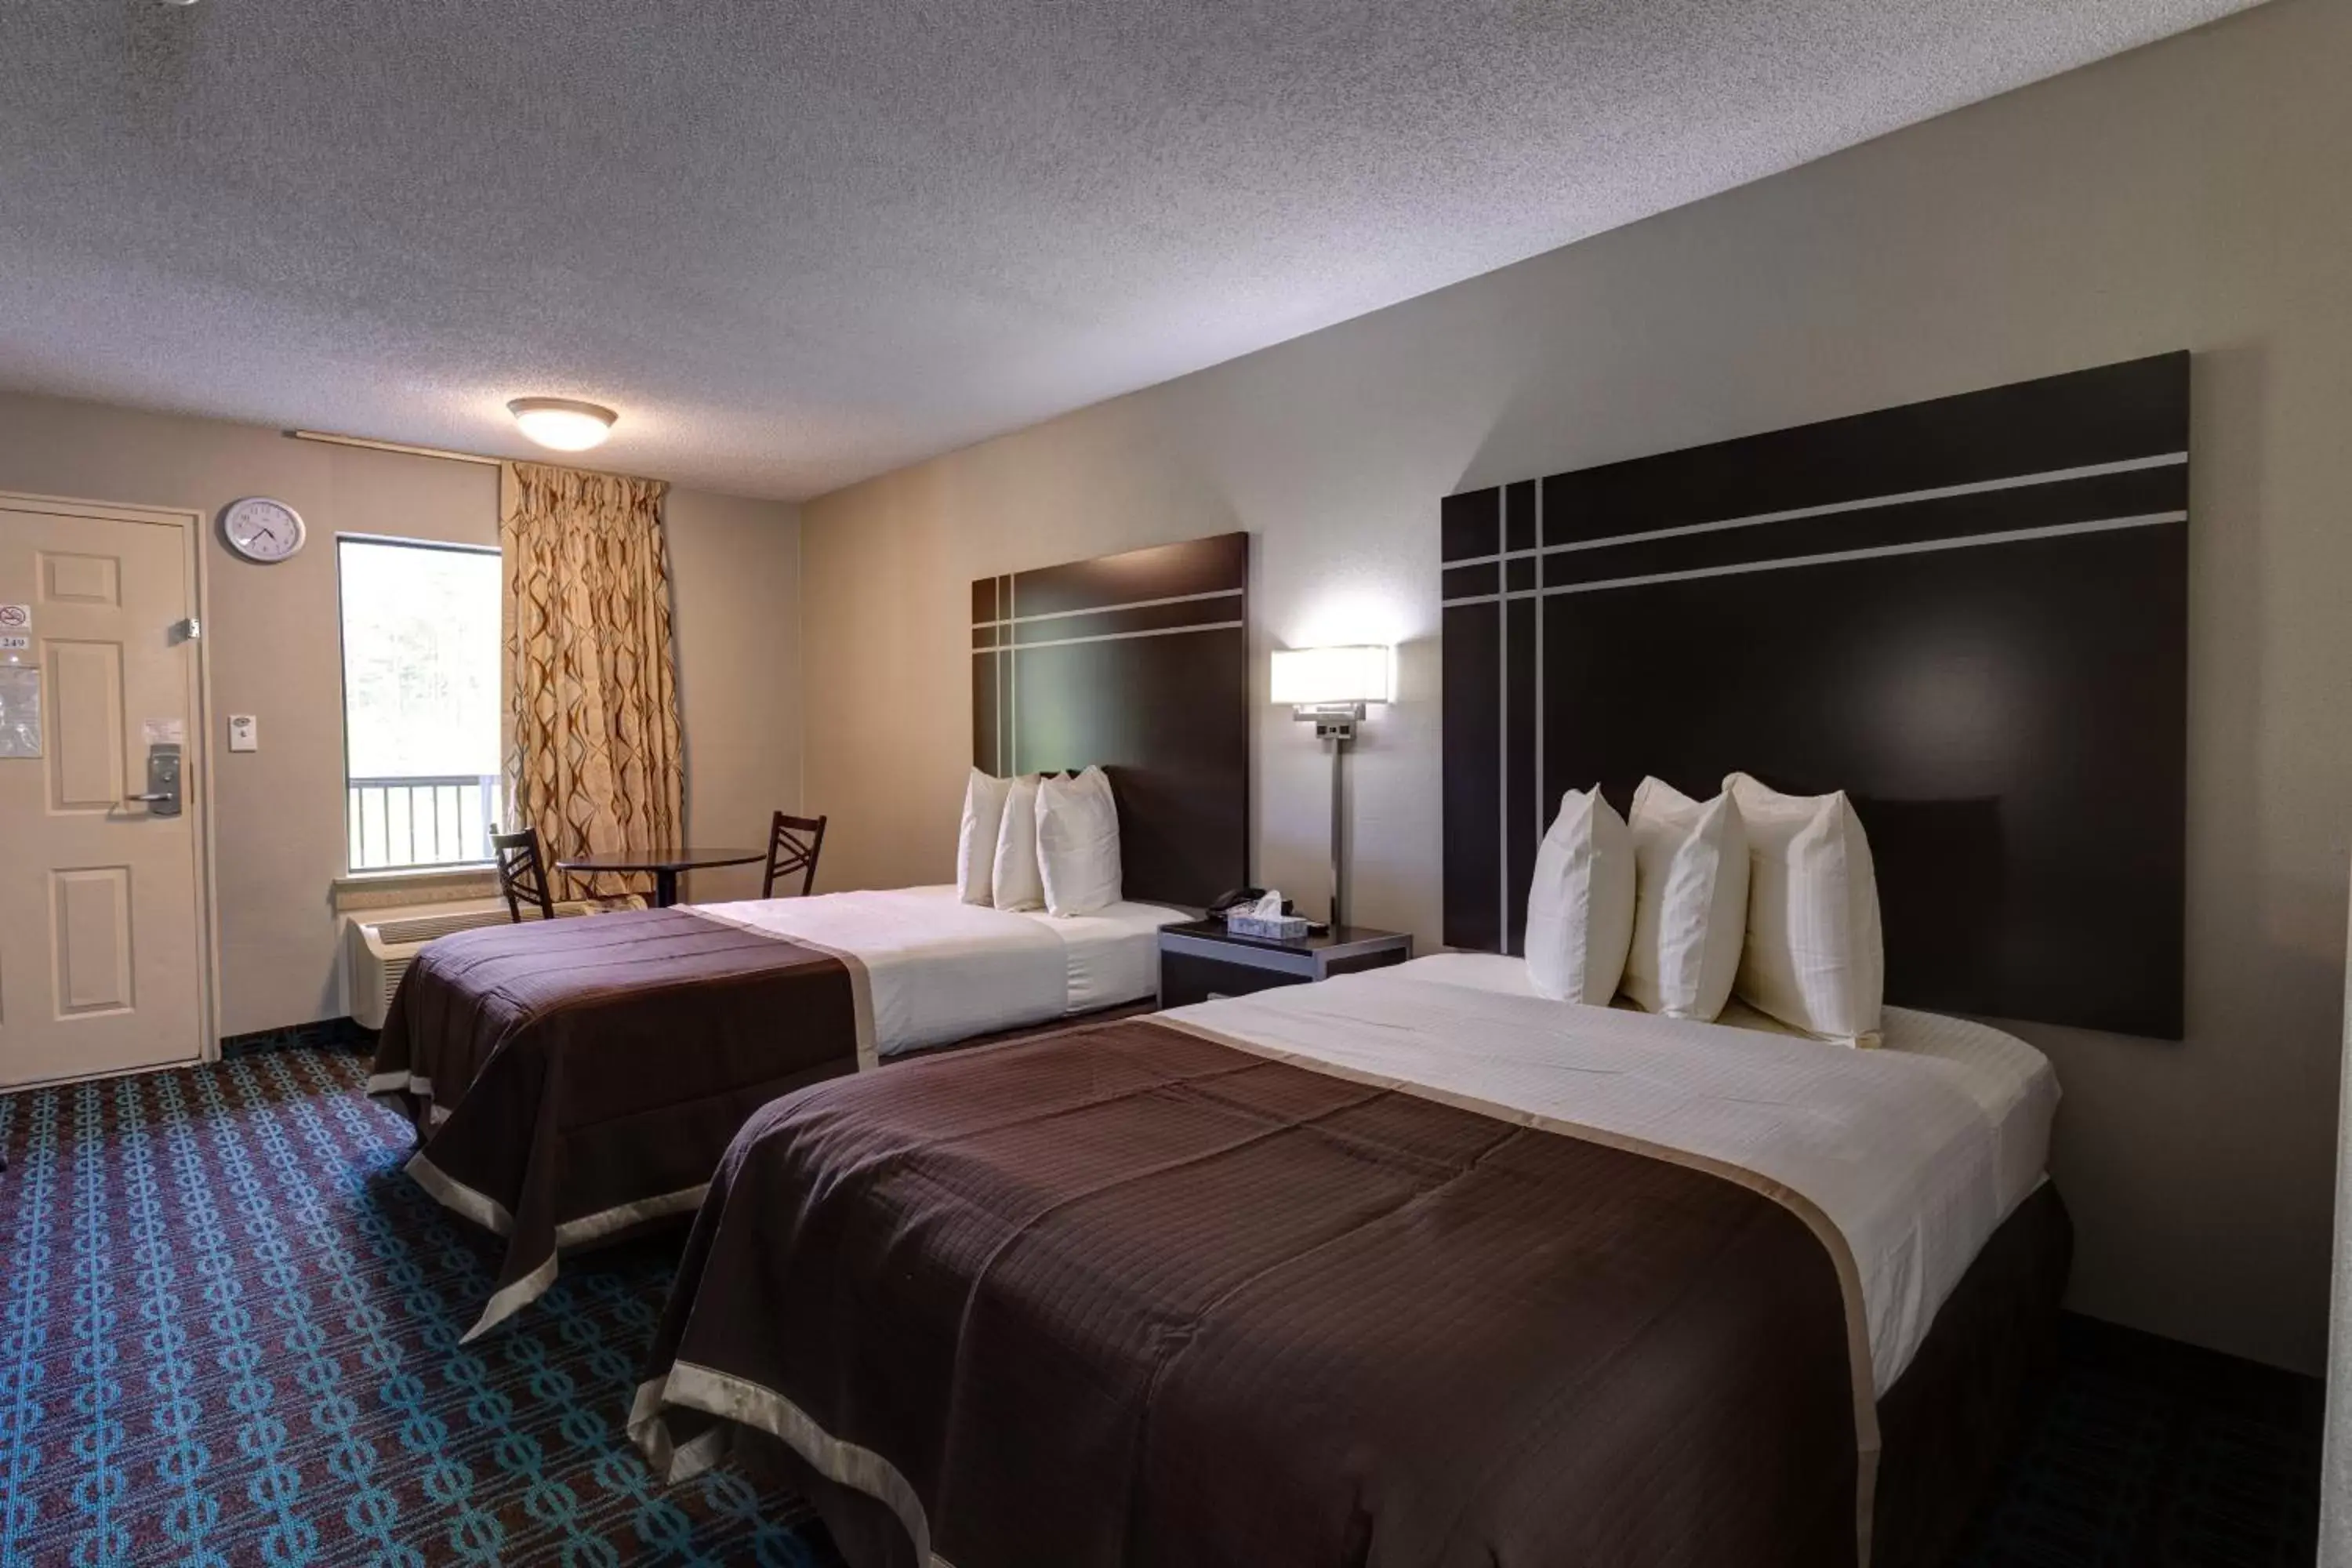 Bed, Room Photo in Deluxe Inn - Fayetteville I-95